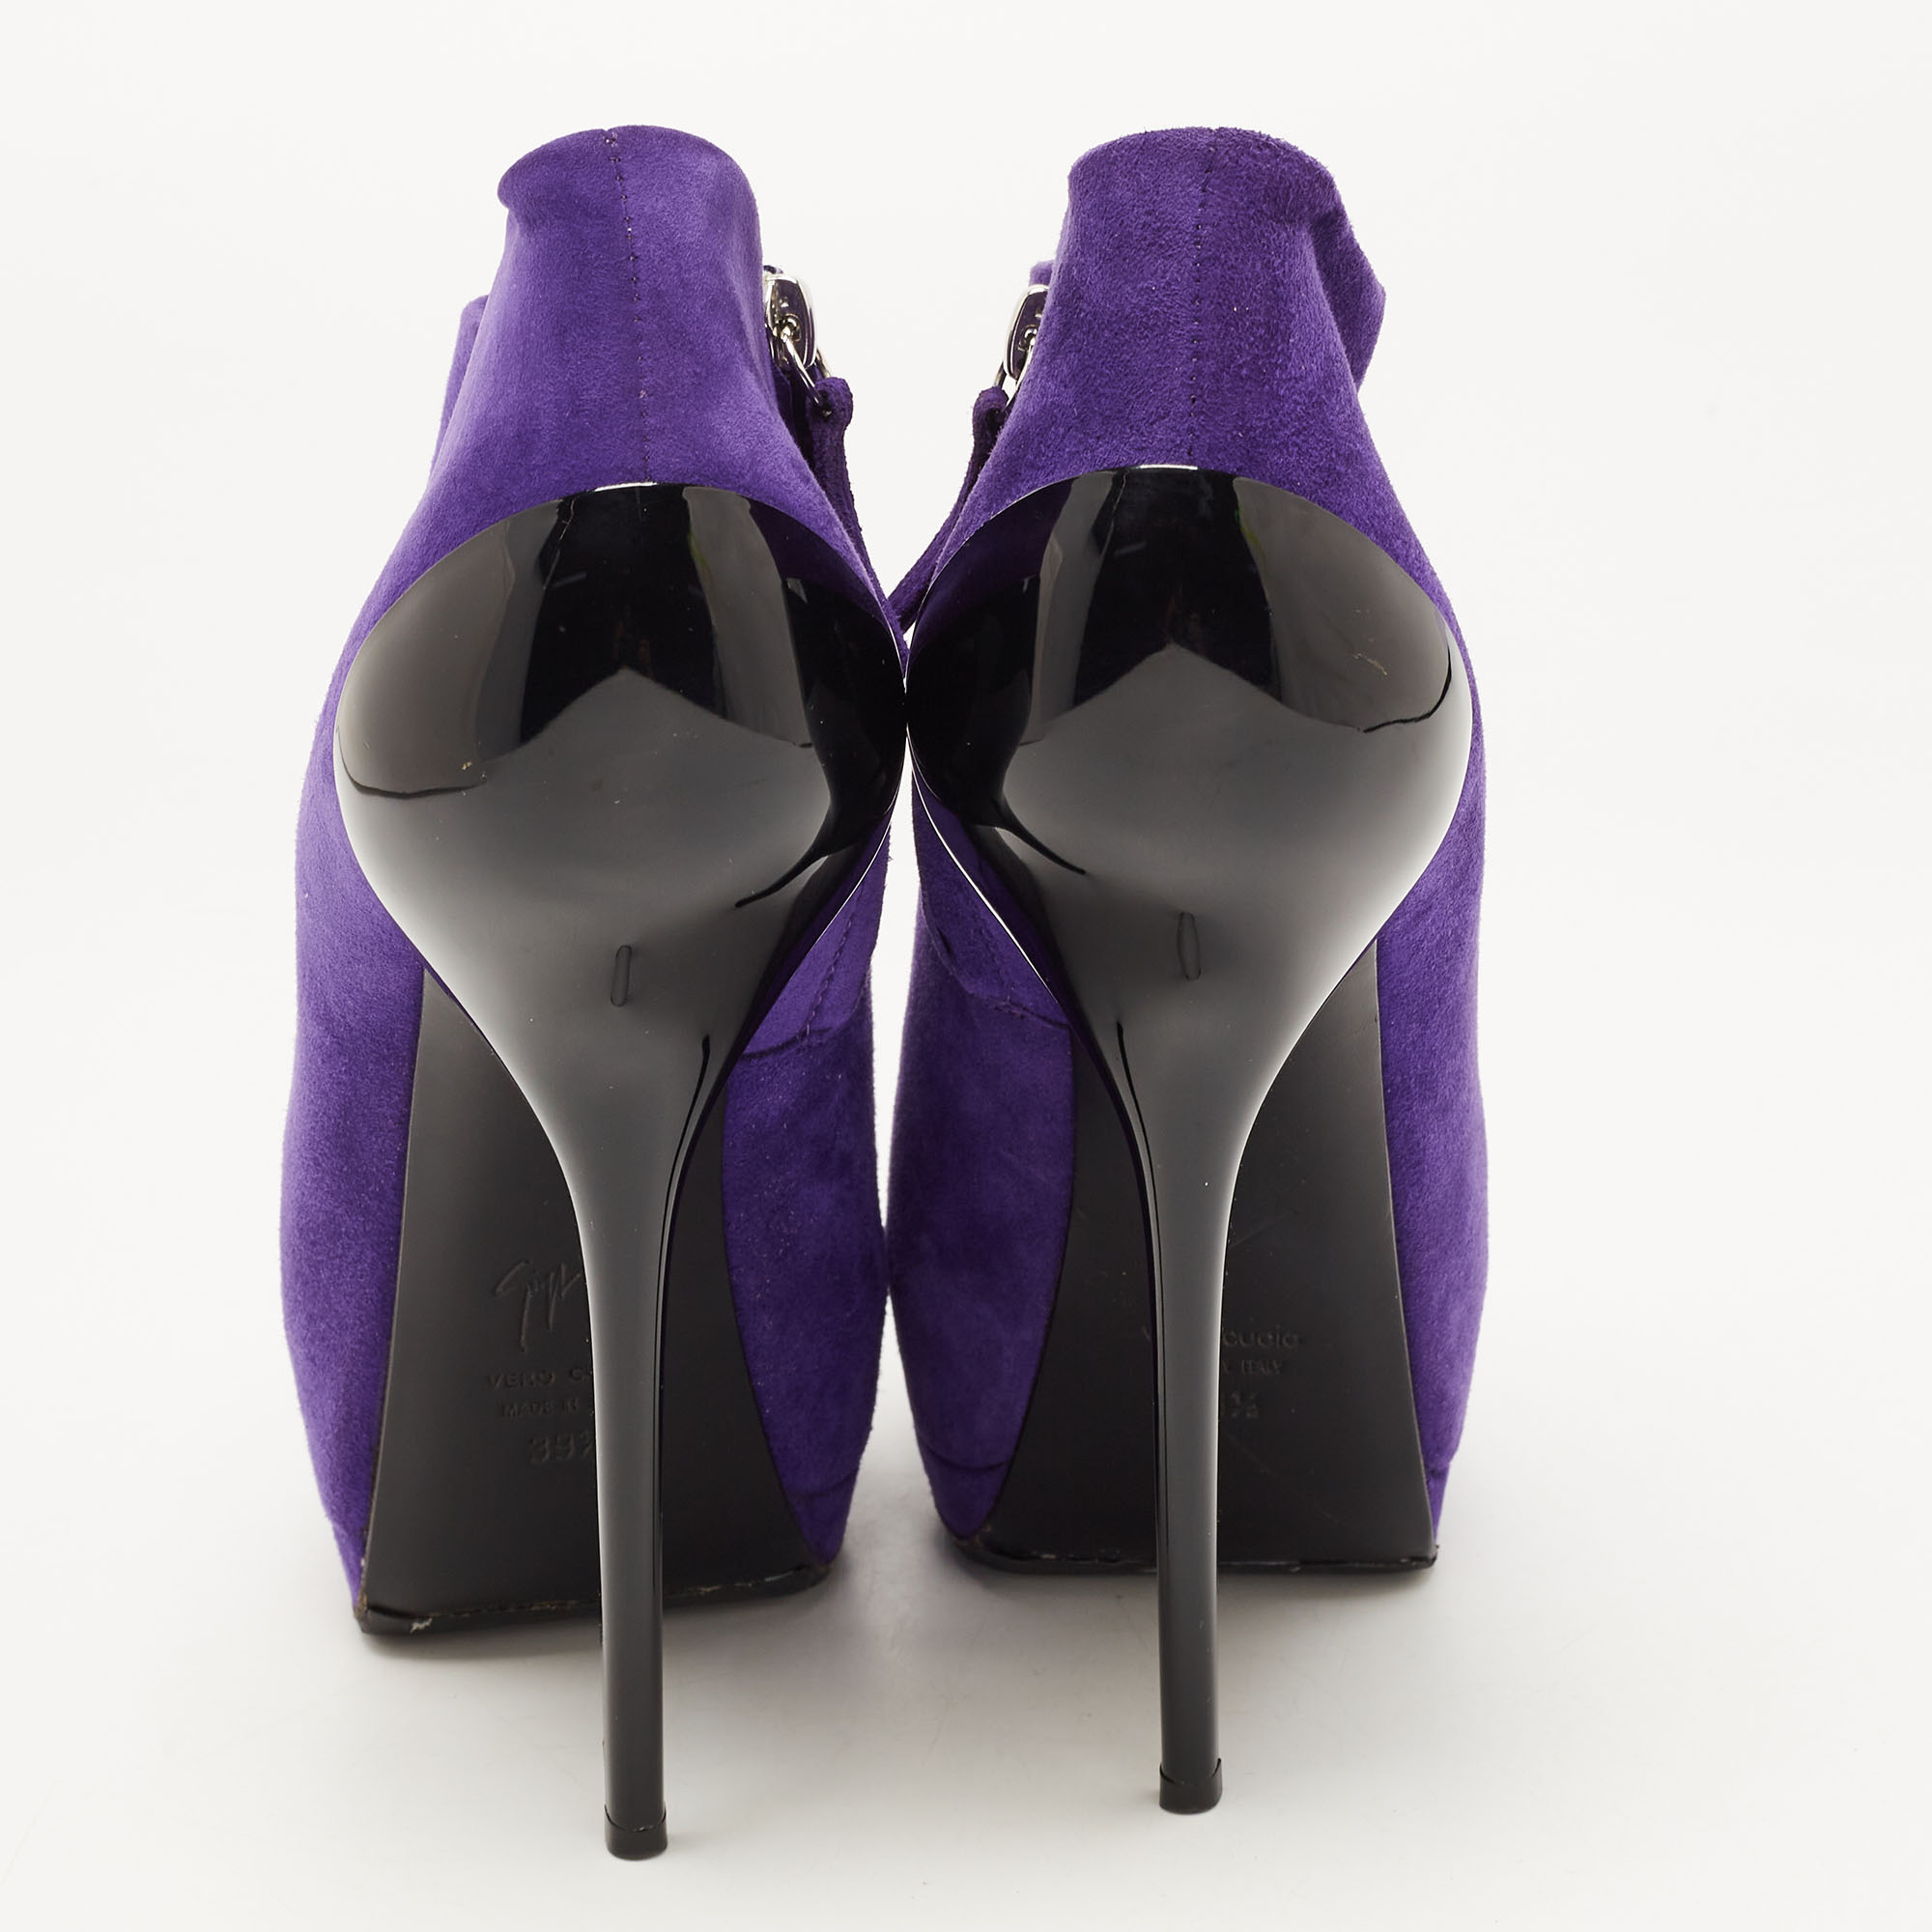 Giuseppe Zanotti Purple Suede Peep Toe Platform Ankle Booties Size 39.5